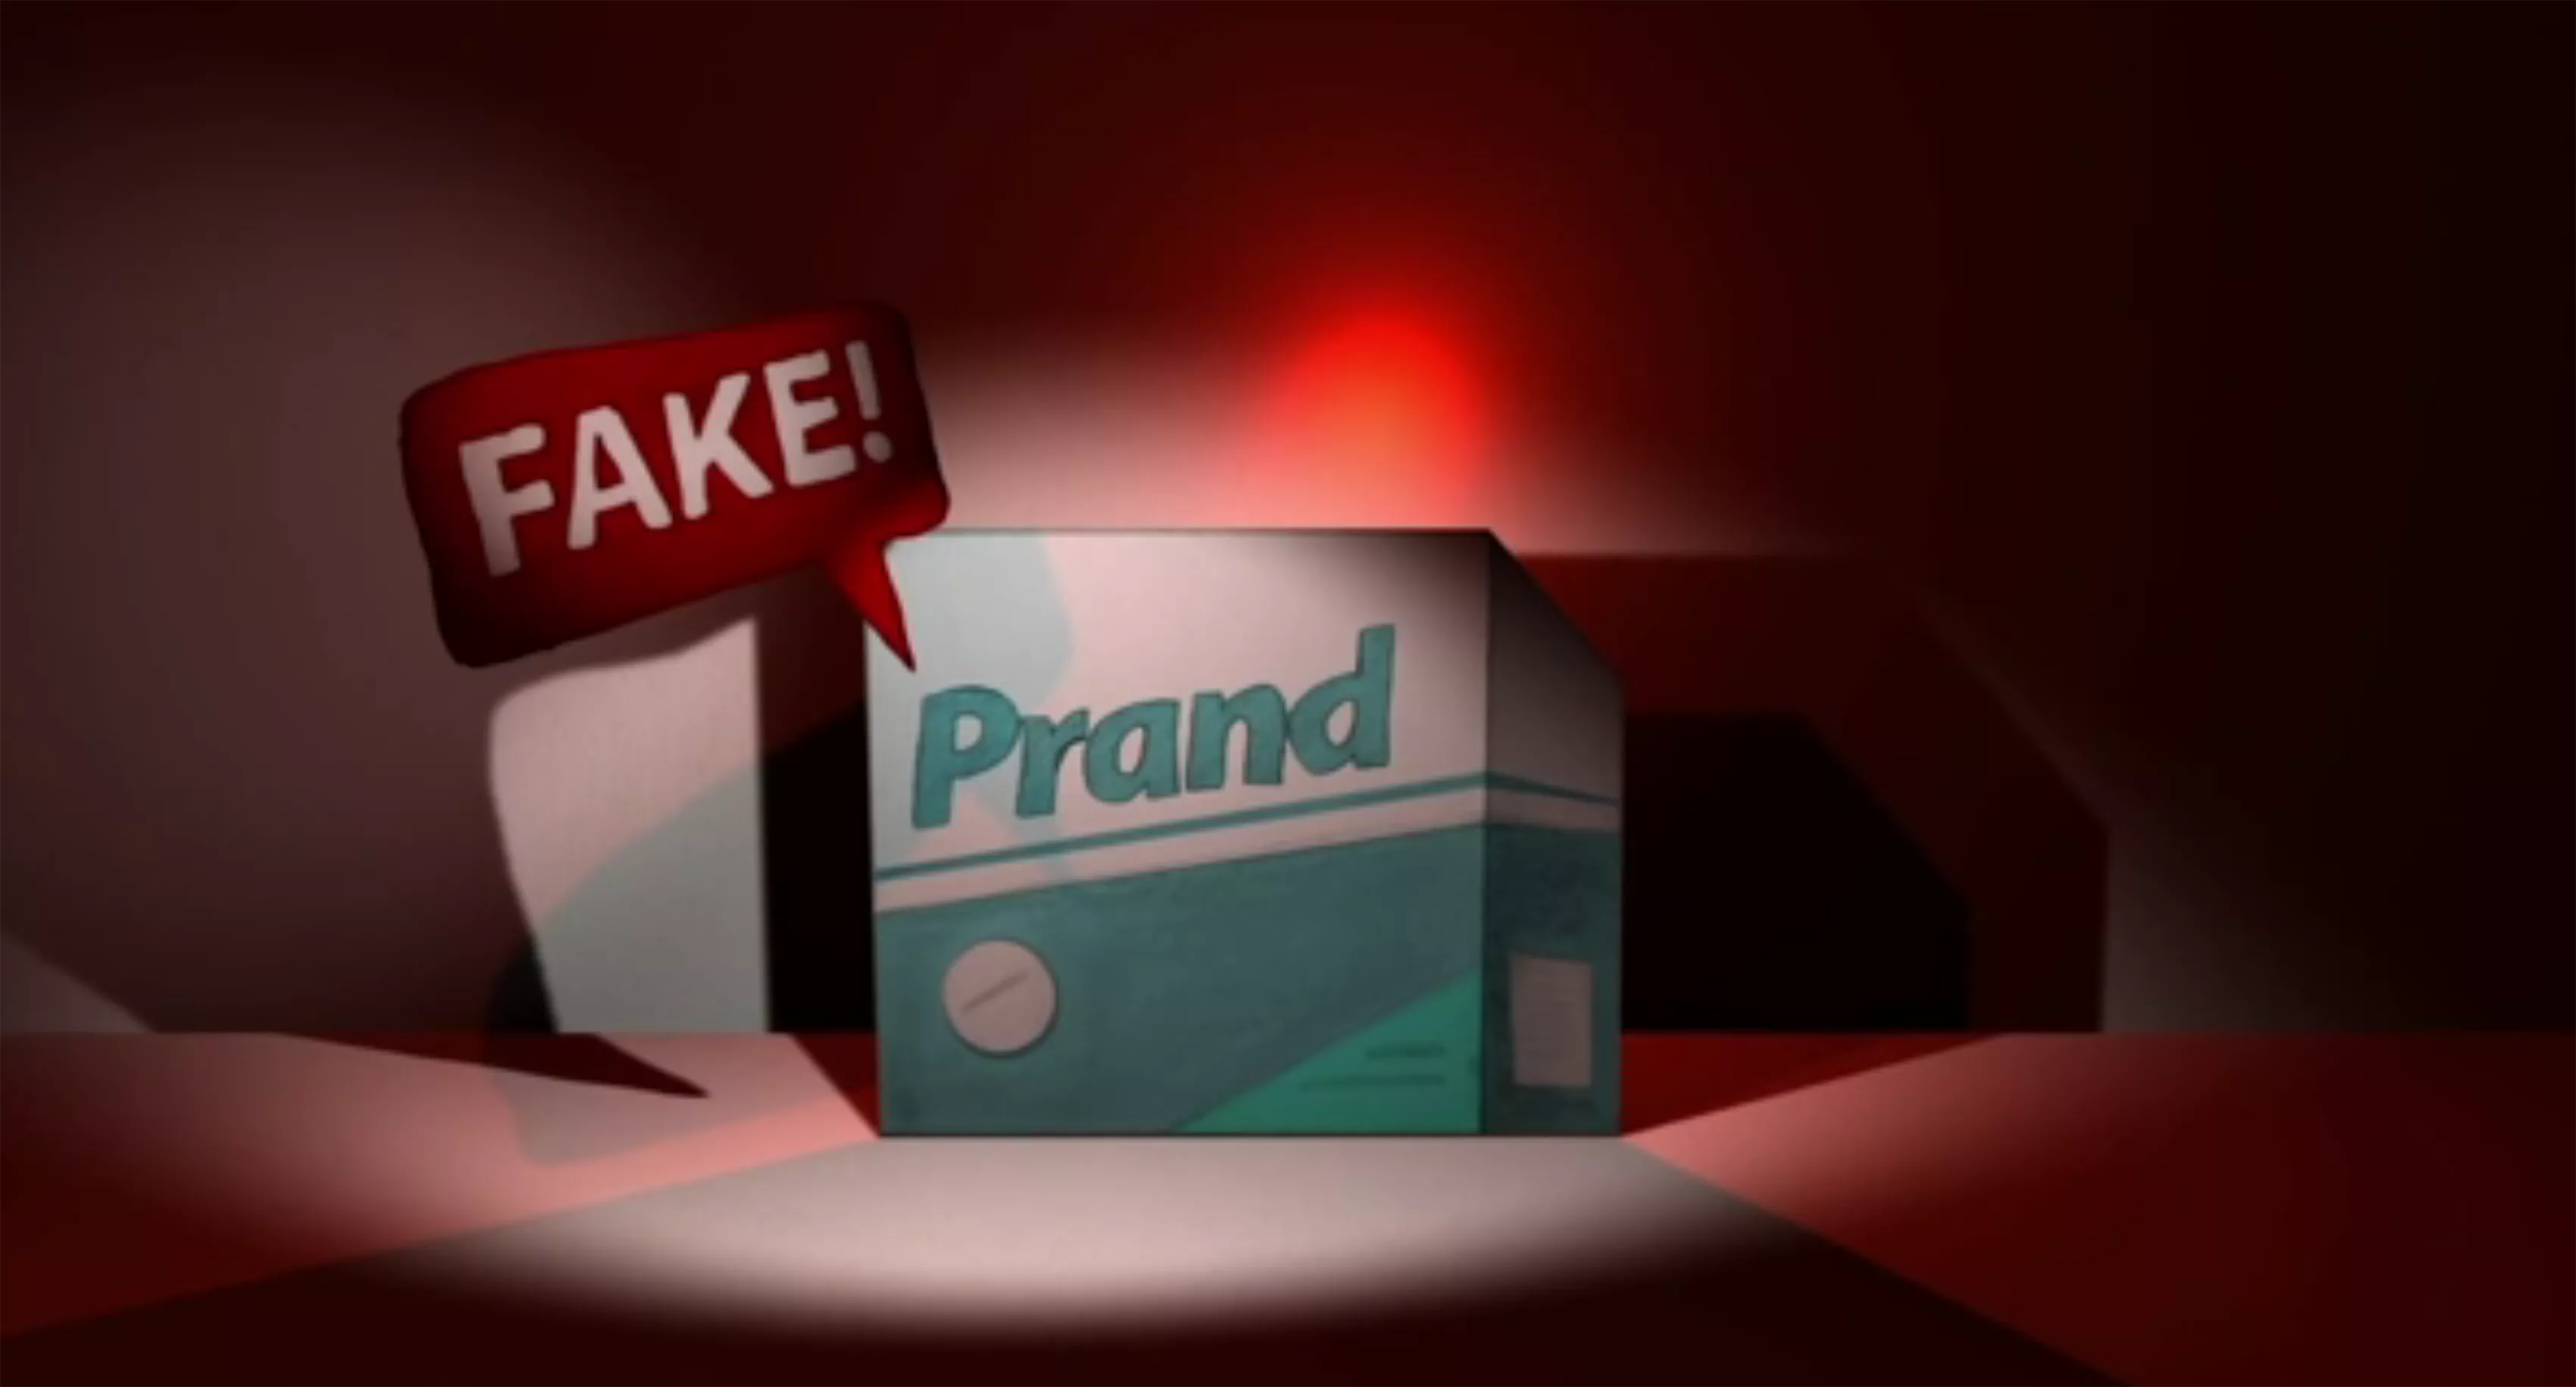 Substandard or counterfeit medicines